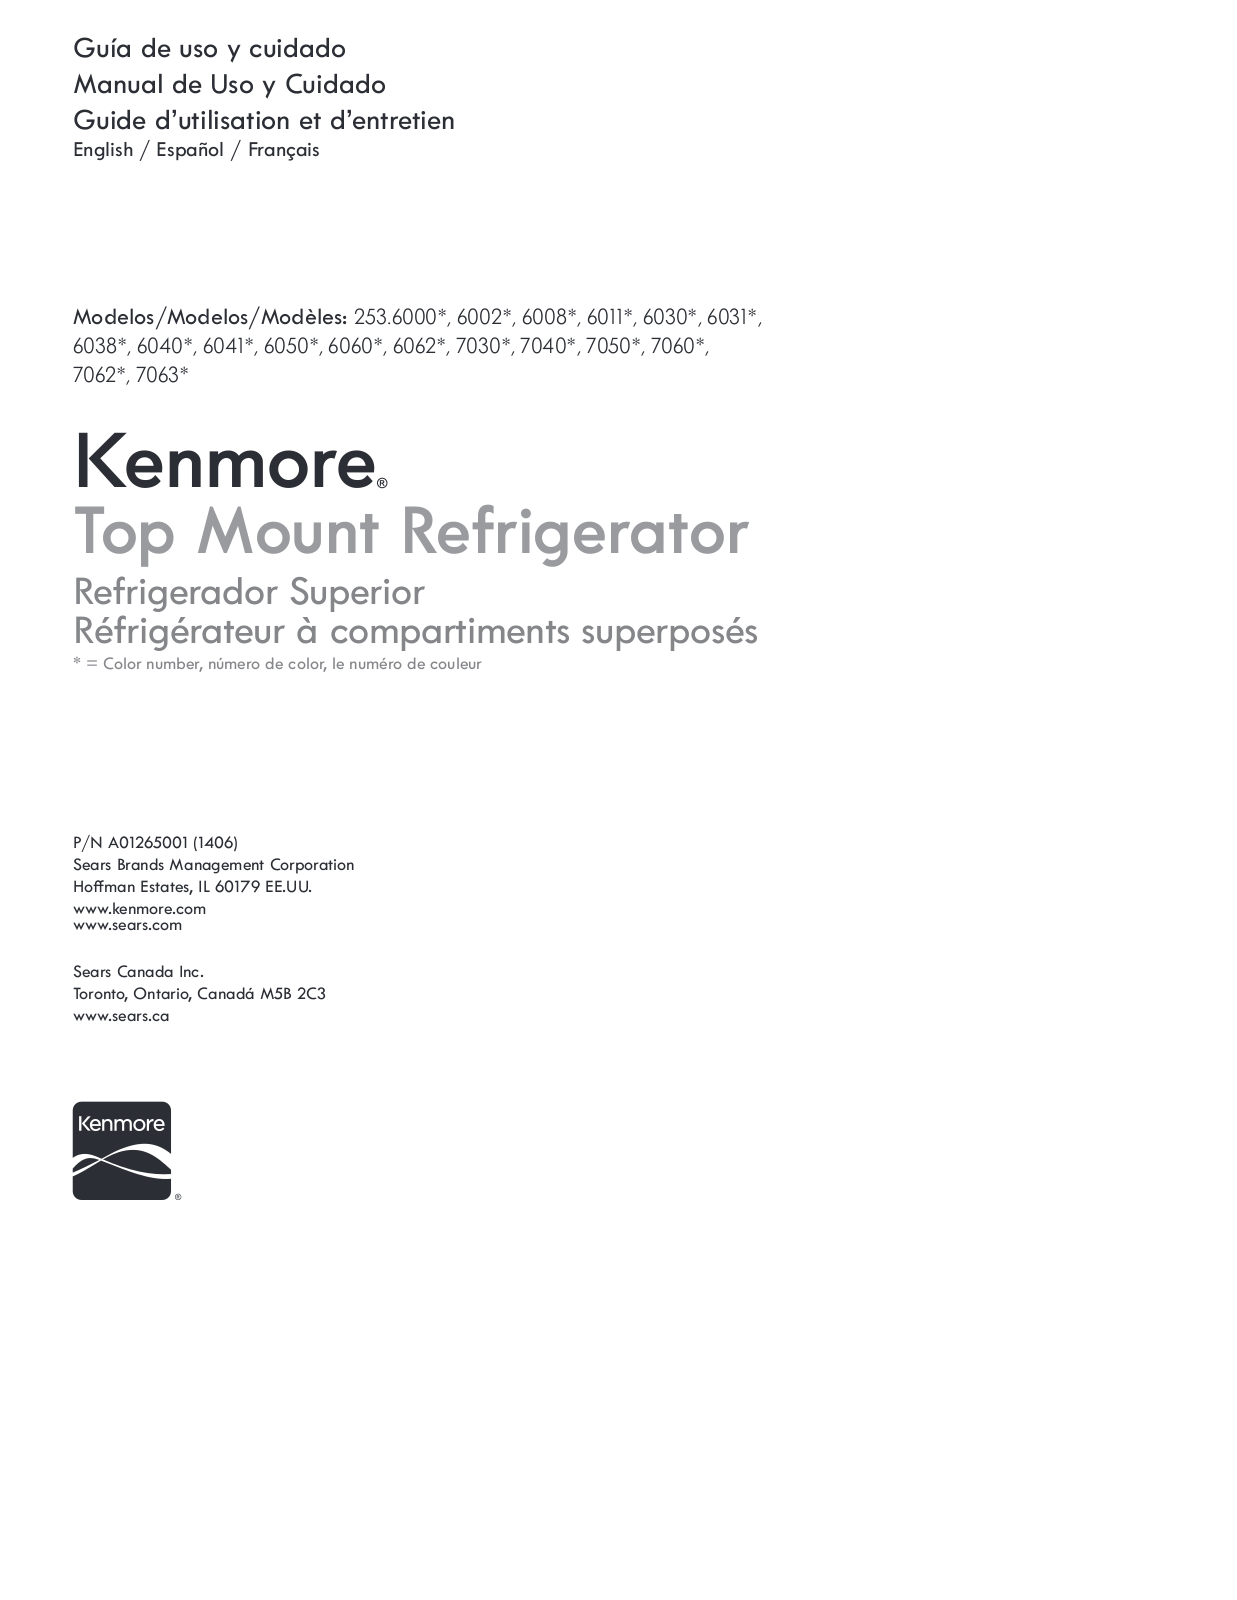 Kenmore 15 cu. ft. Top Freezer Refrigerator Owner's Manual